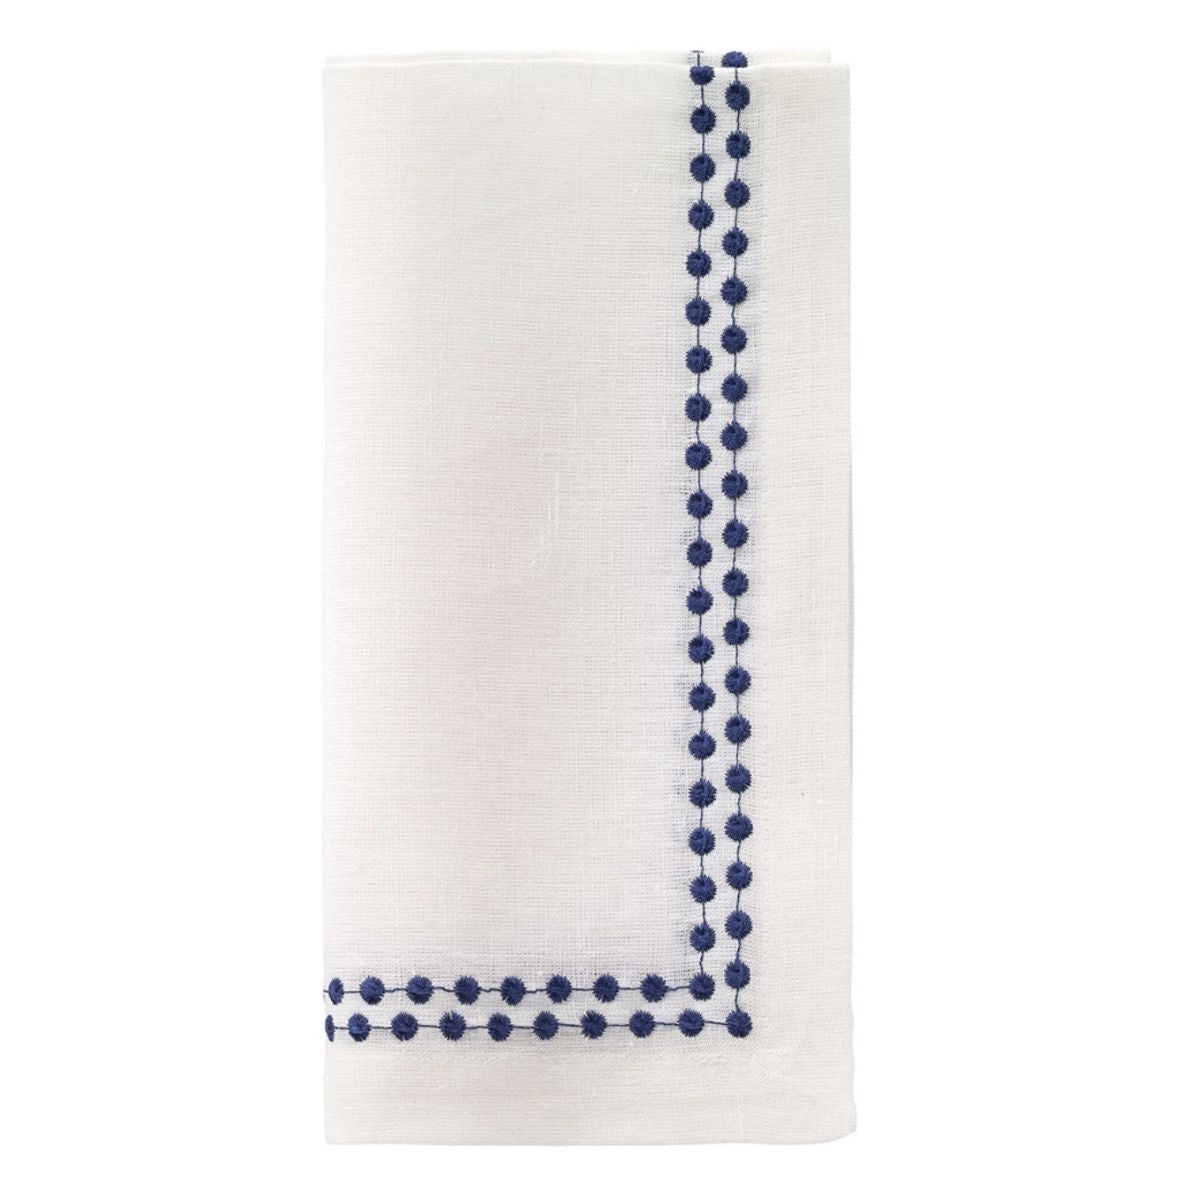 Pearls Linen Napkins, Set of 4-Bespoke Designs